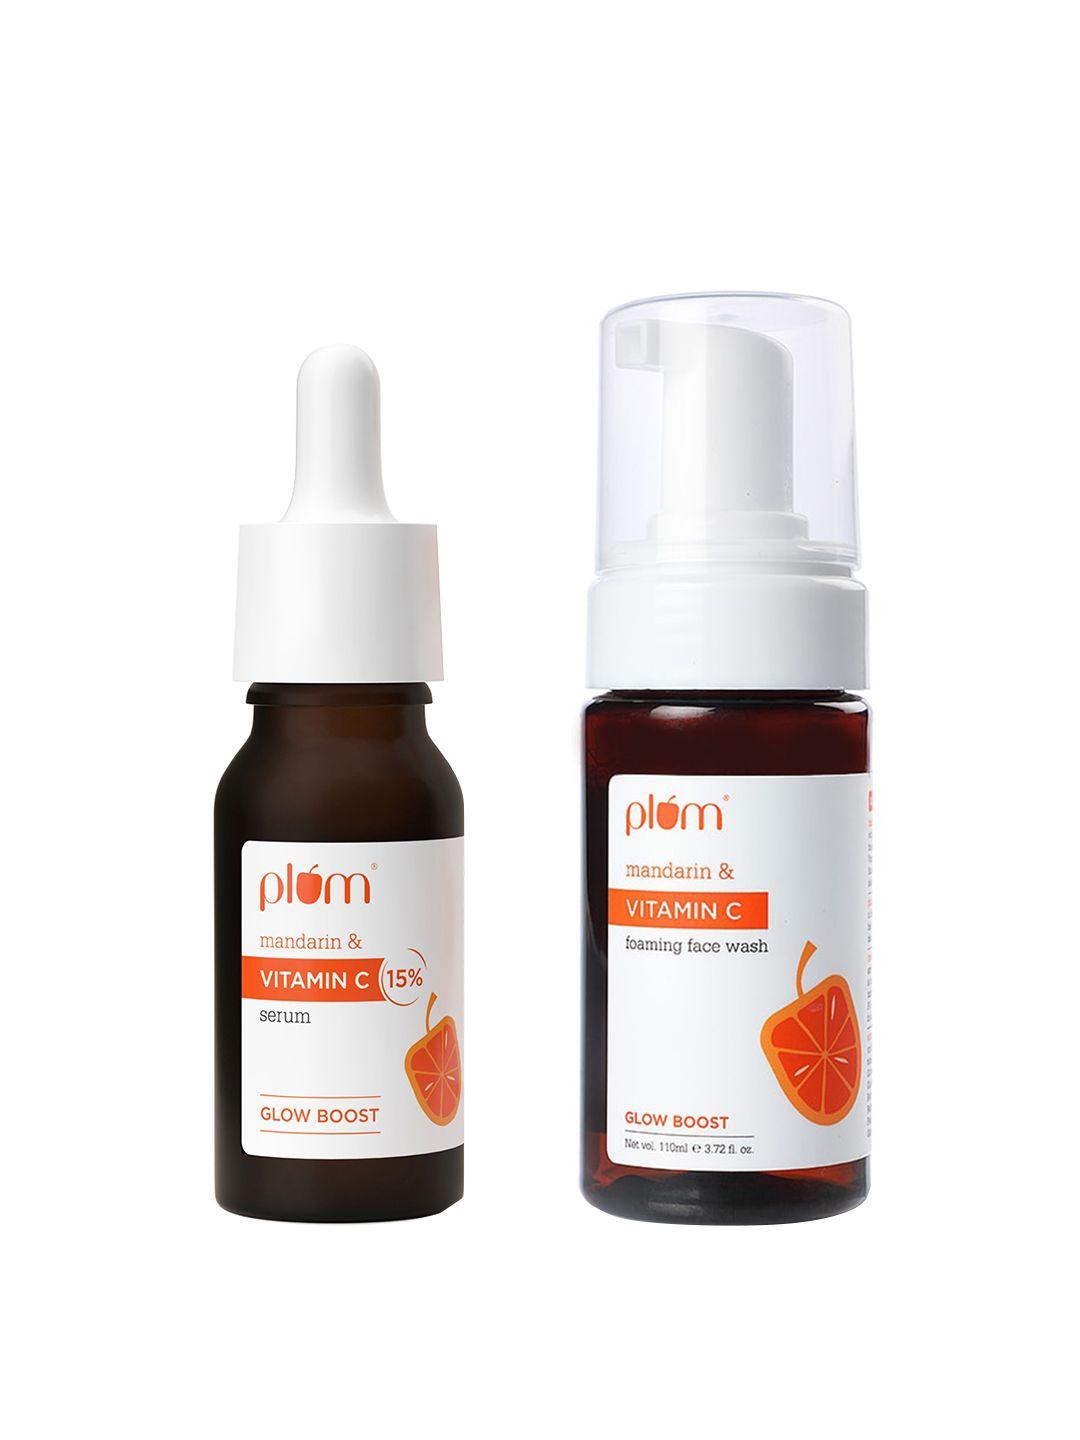 plum set of mandarin & vitamin c serum & face wash